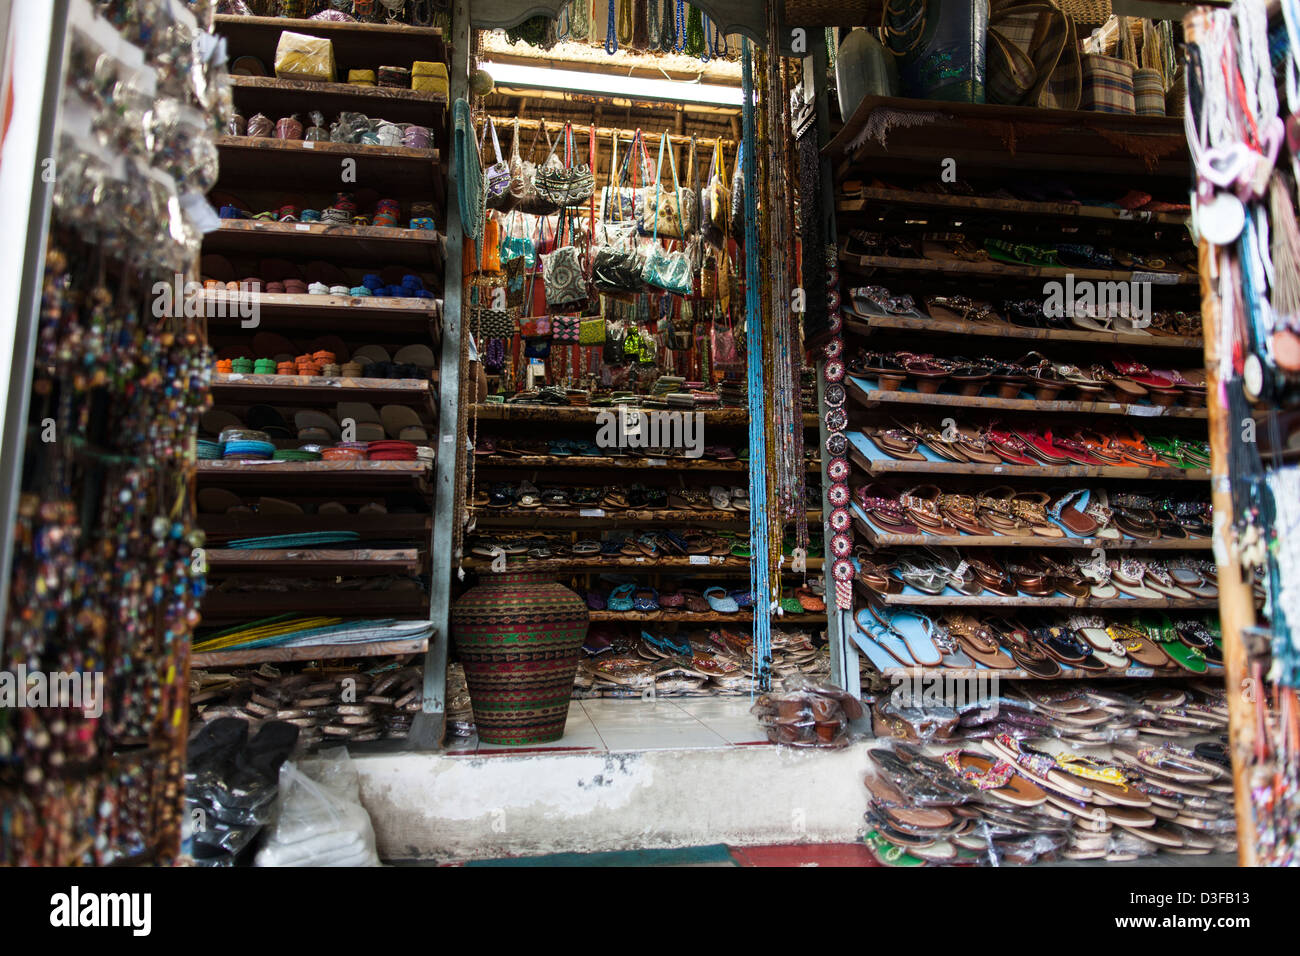 View inside a shop in Ubud, Bali, Indonesia Stock Photo - Alamy